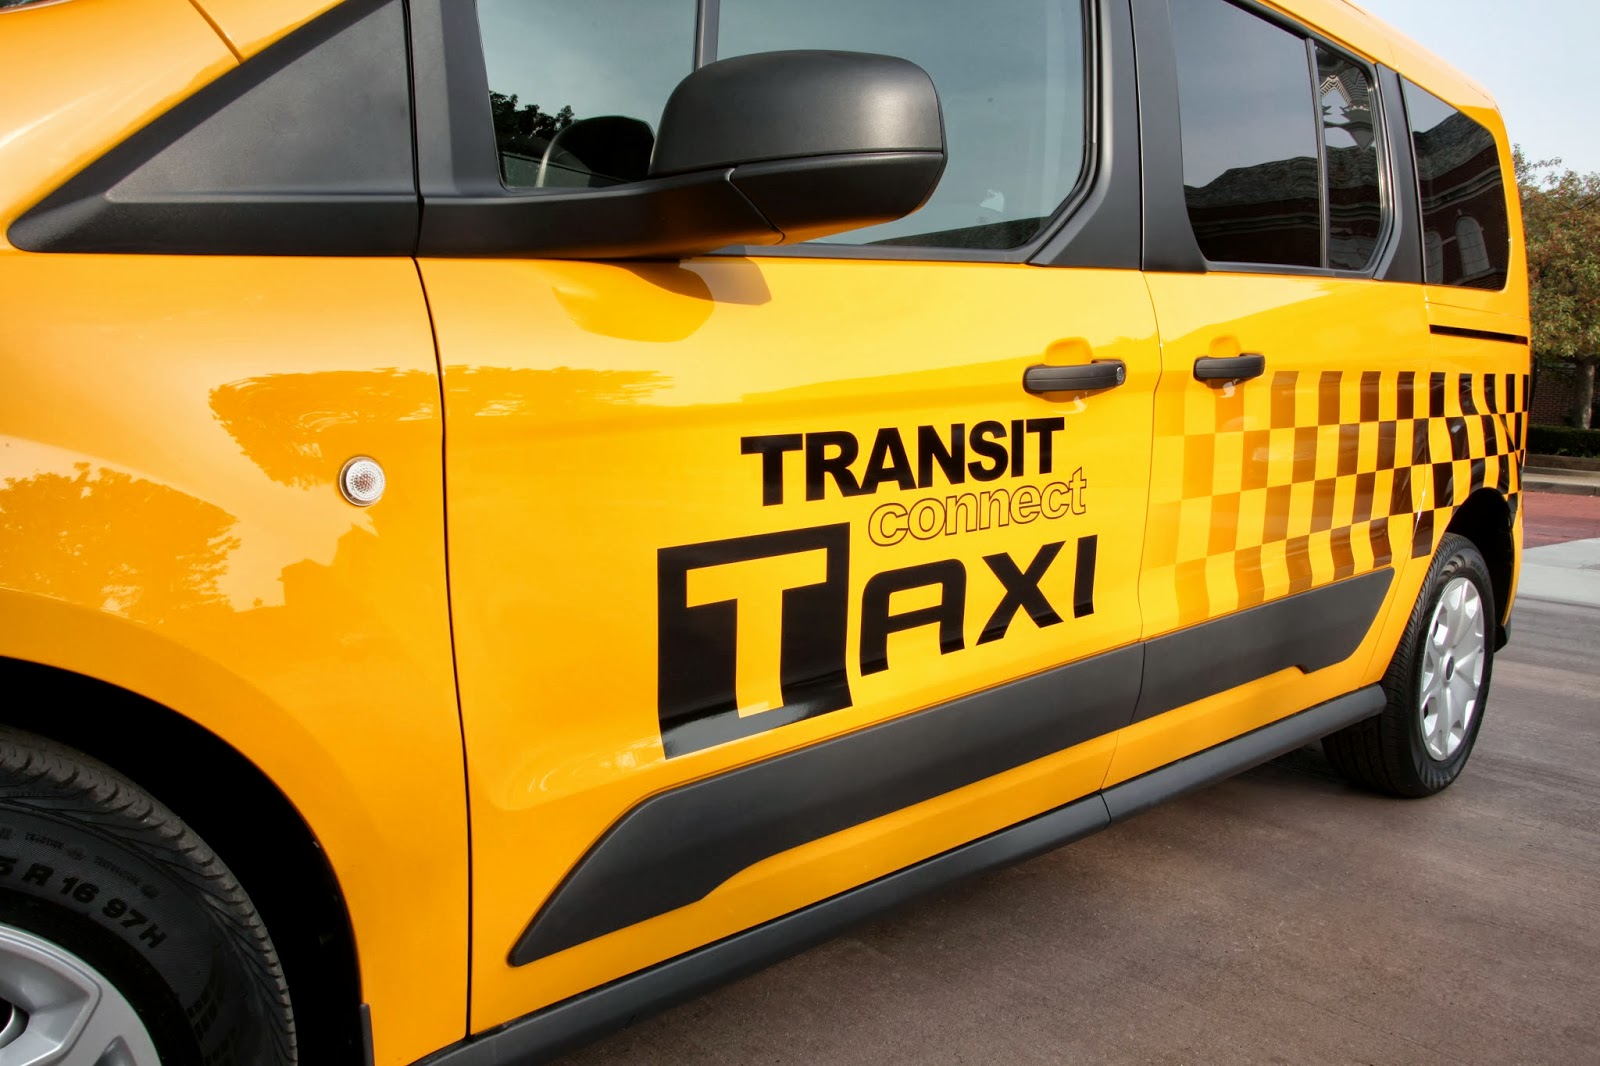 Такси транзит. Ford Transit такси. Ford-Transit-connect-Taxi-2019-02. Форд Транзит Коннект такси. Ford Transit 2013 социальная такси.